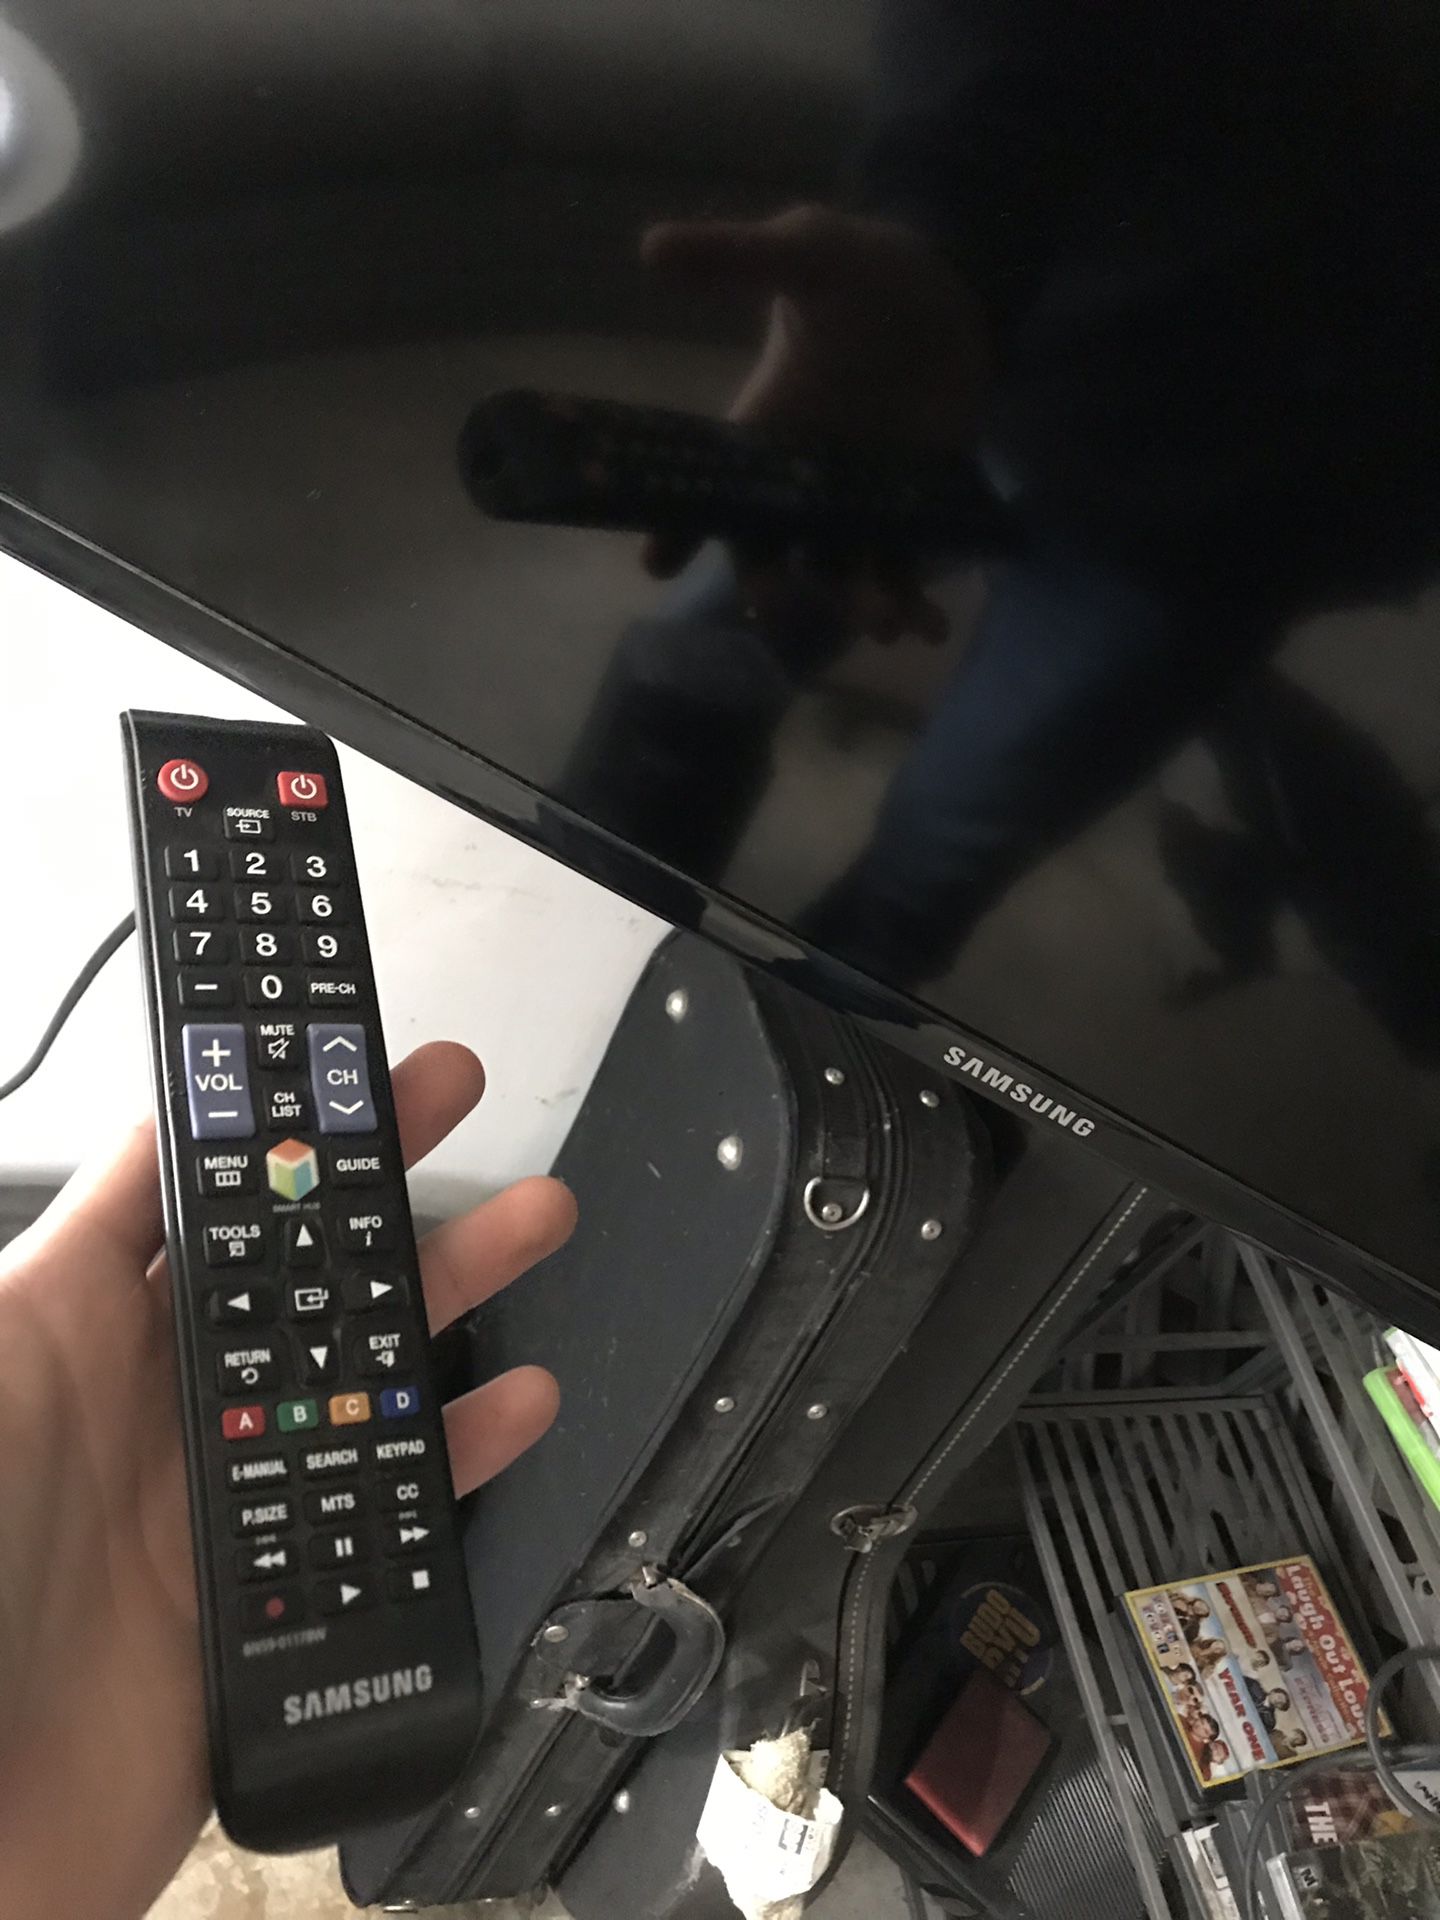 Samsung 50” smart TV w/remote